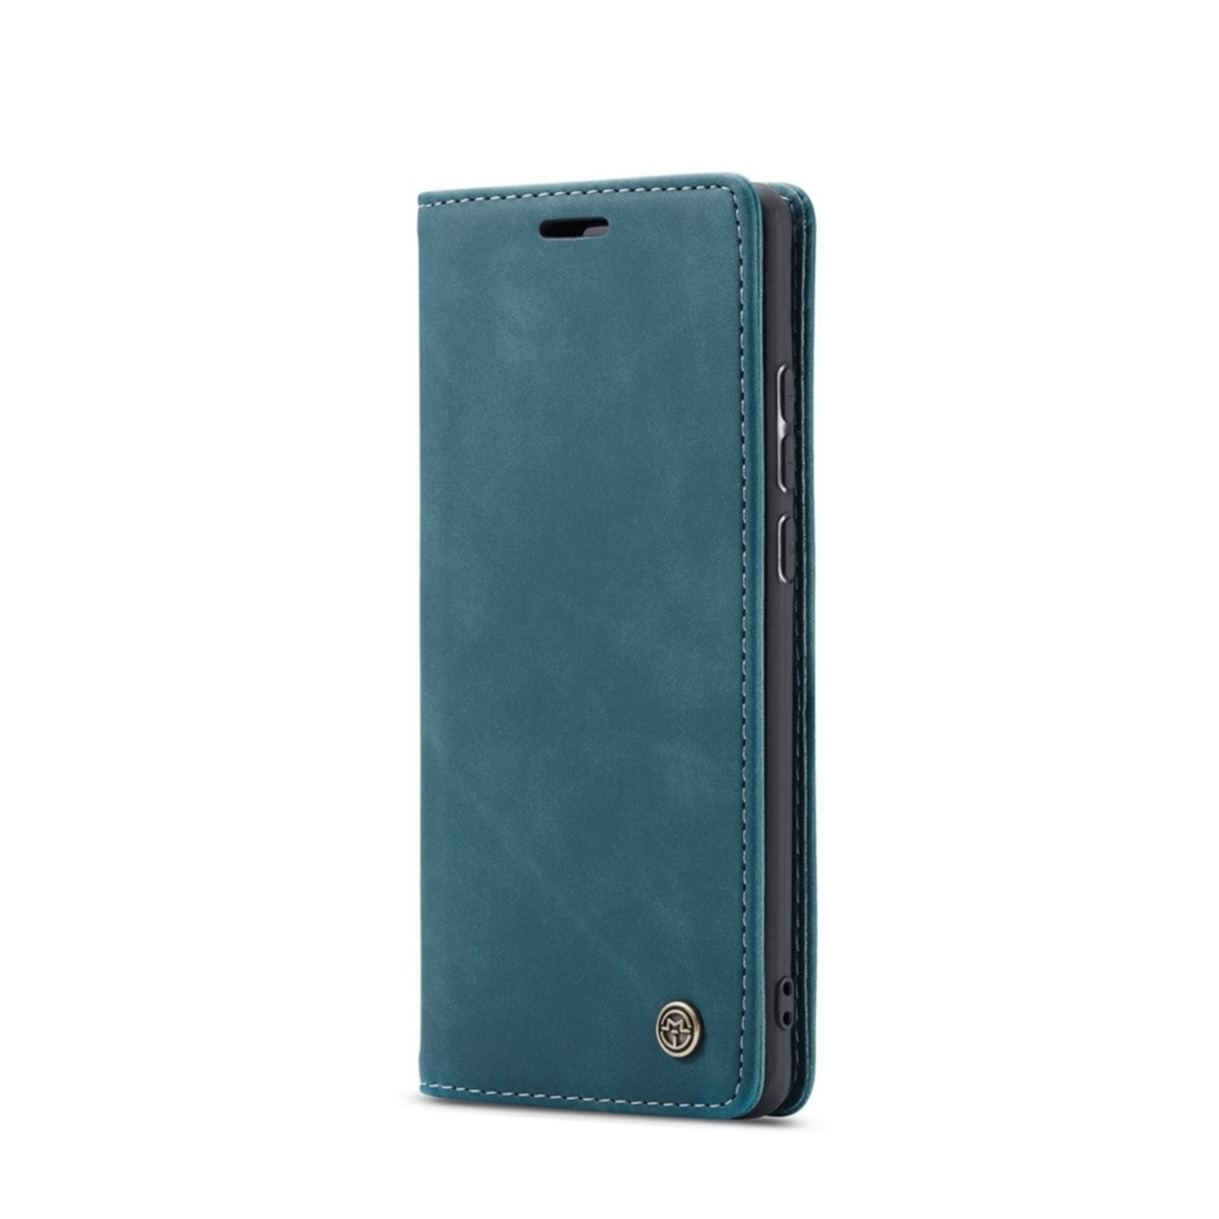 Image of Caseme - Huawei P30 Leder Tasche Flip Wallet Etui mit Kartenfächern - Dunkelgrün bei Apfelkiste.ch